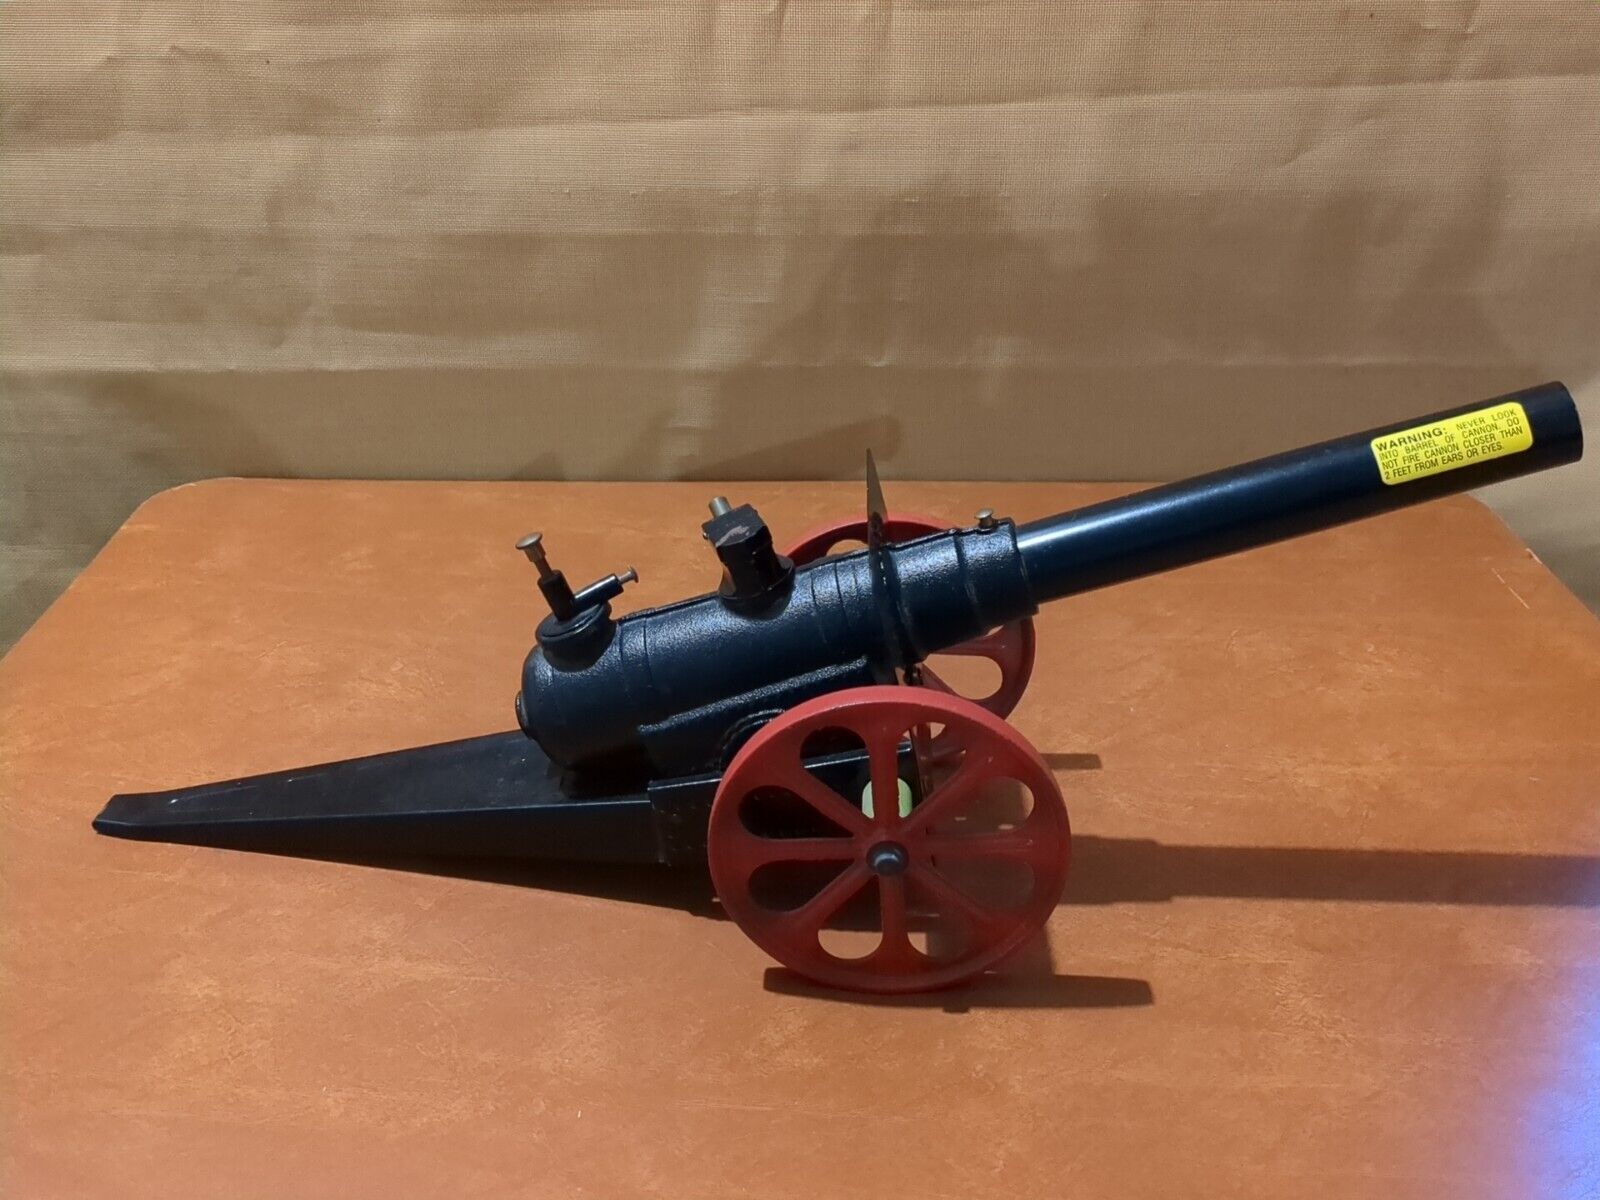 WW1 Cannon Replica Functional Carbide Cannon. Very Nice Unique Craftsmanship